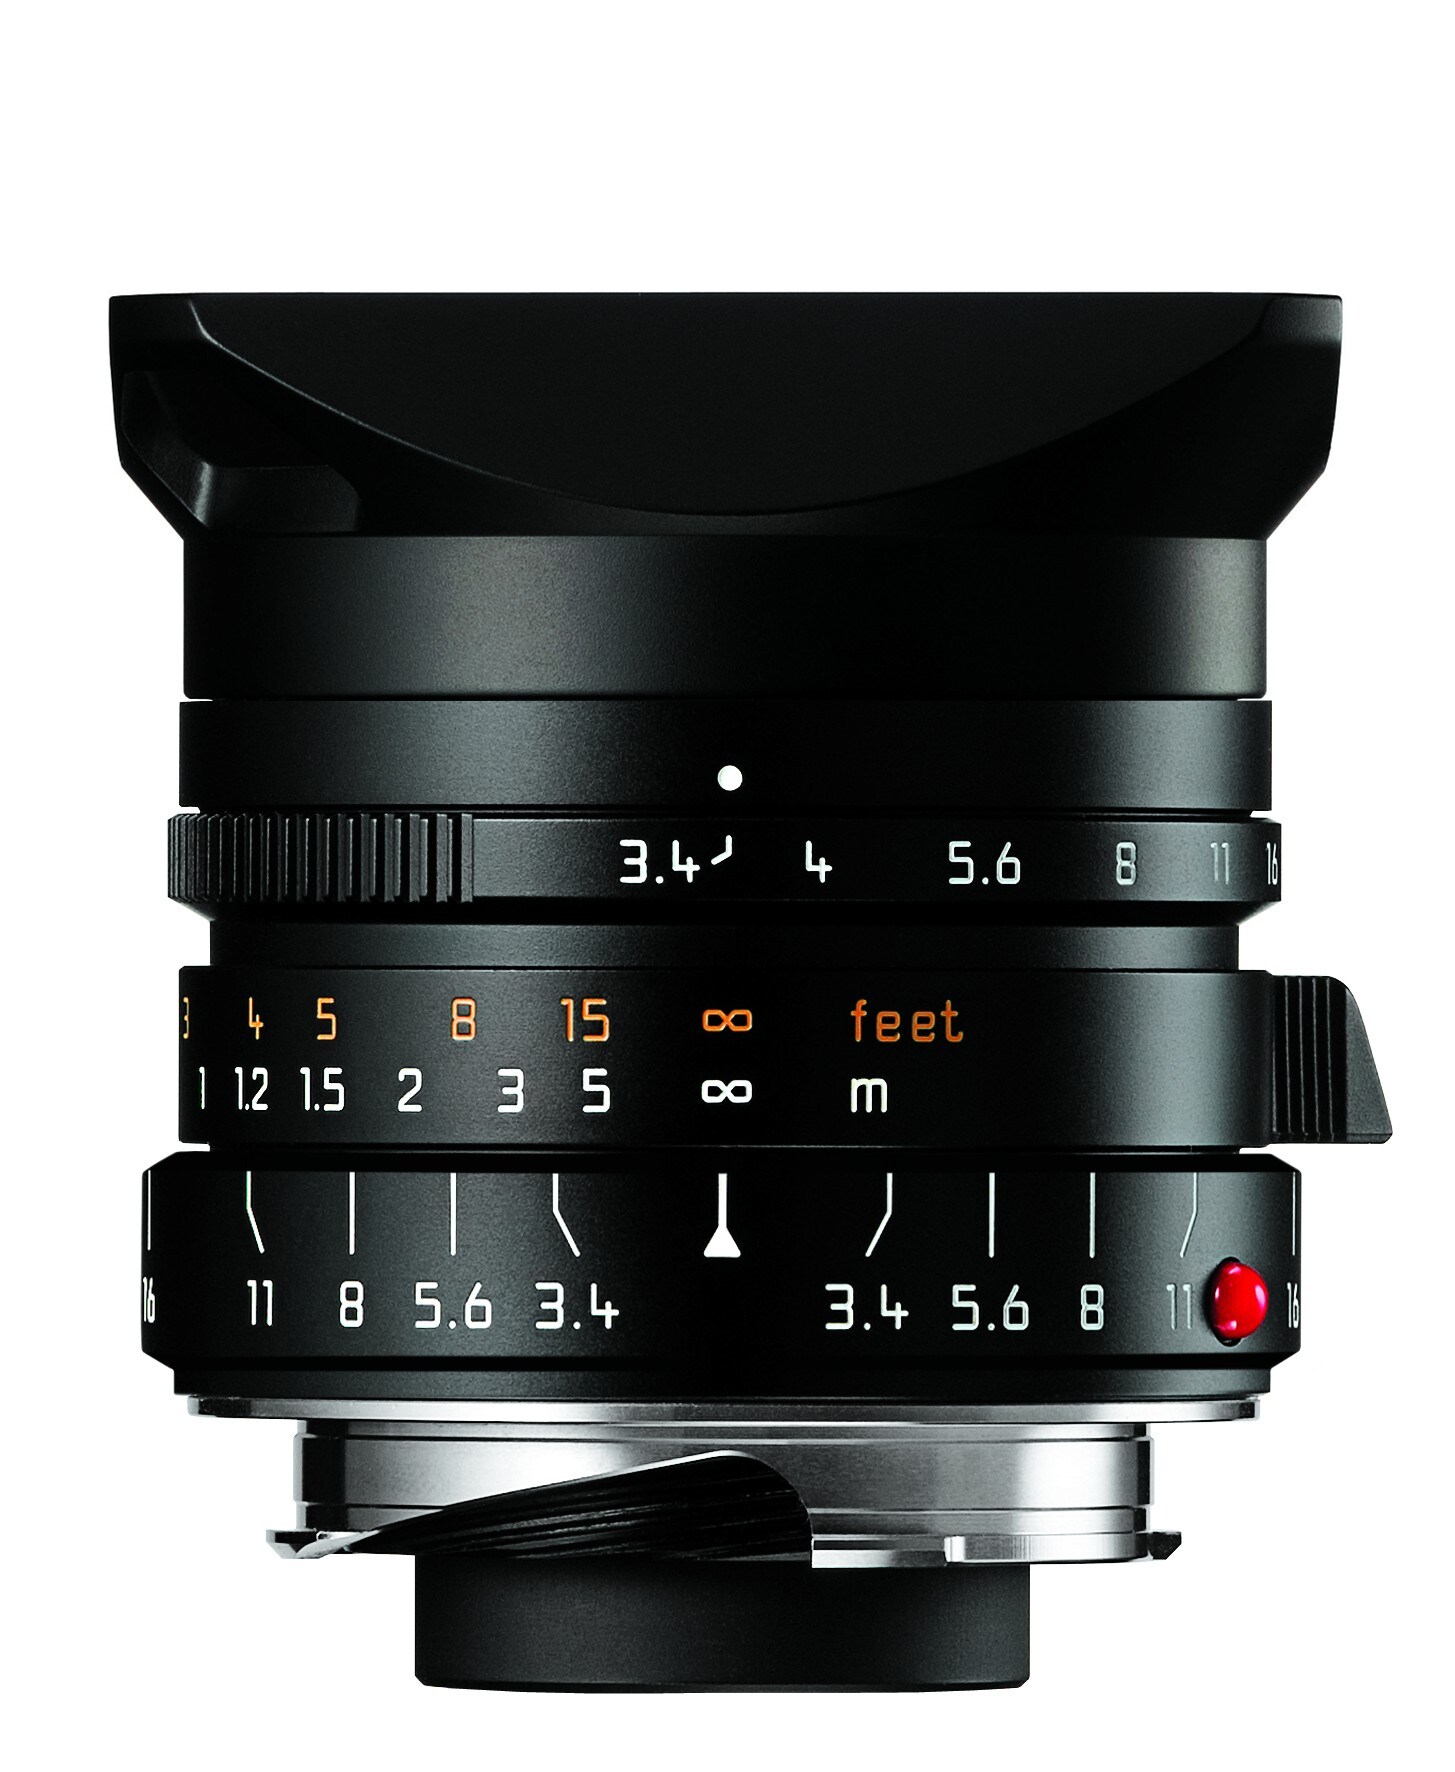 Leica Super Elmar M 21mm f/3,4 Asph